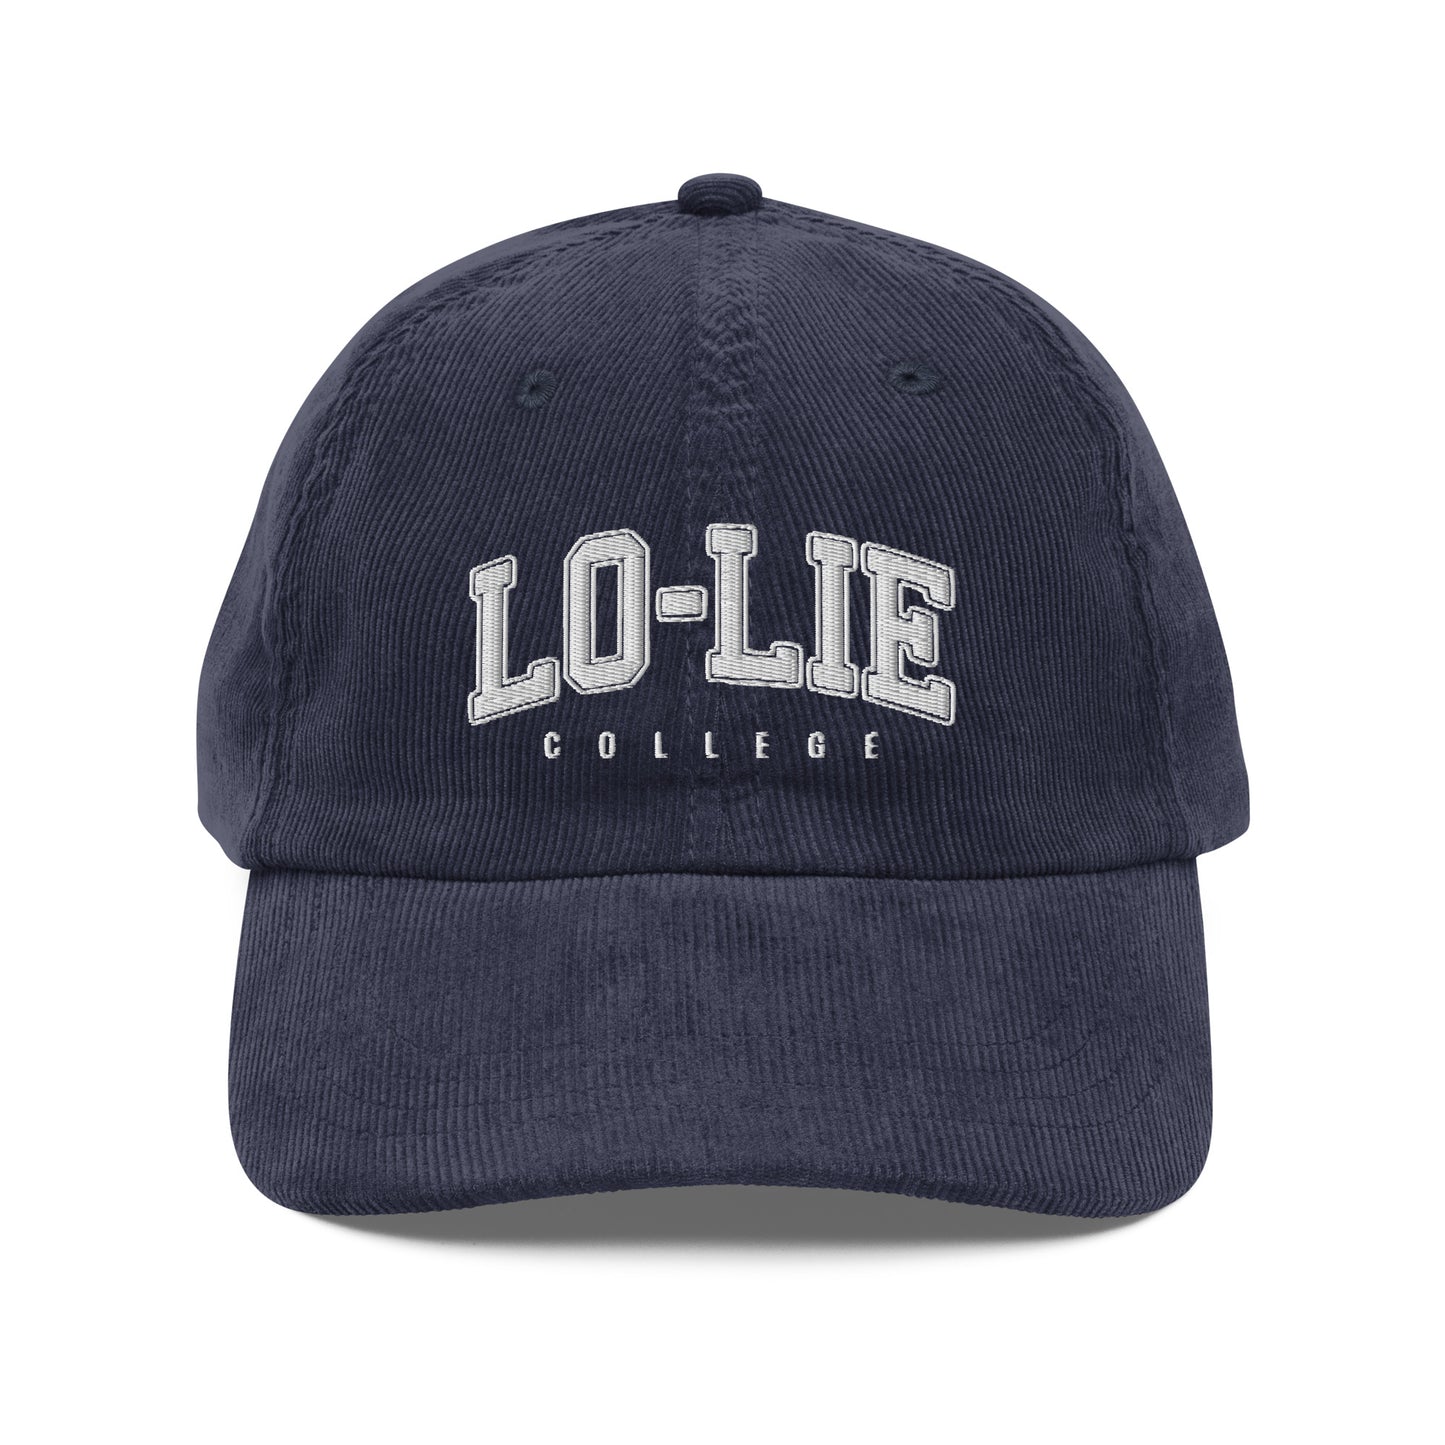 College Vintage corduroy cap